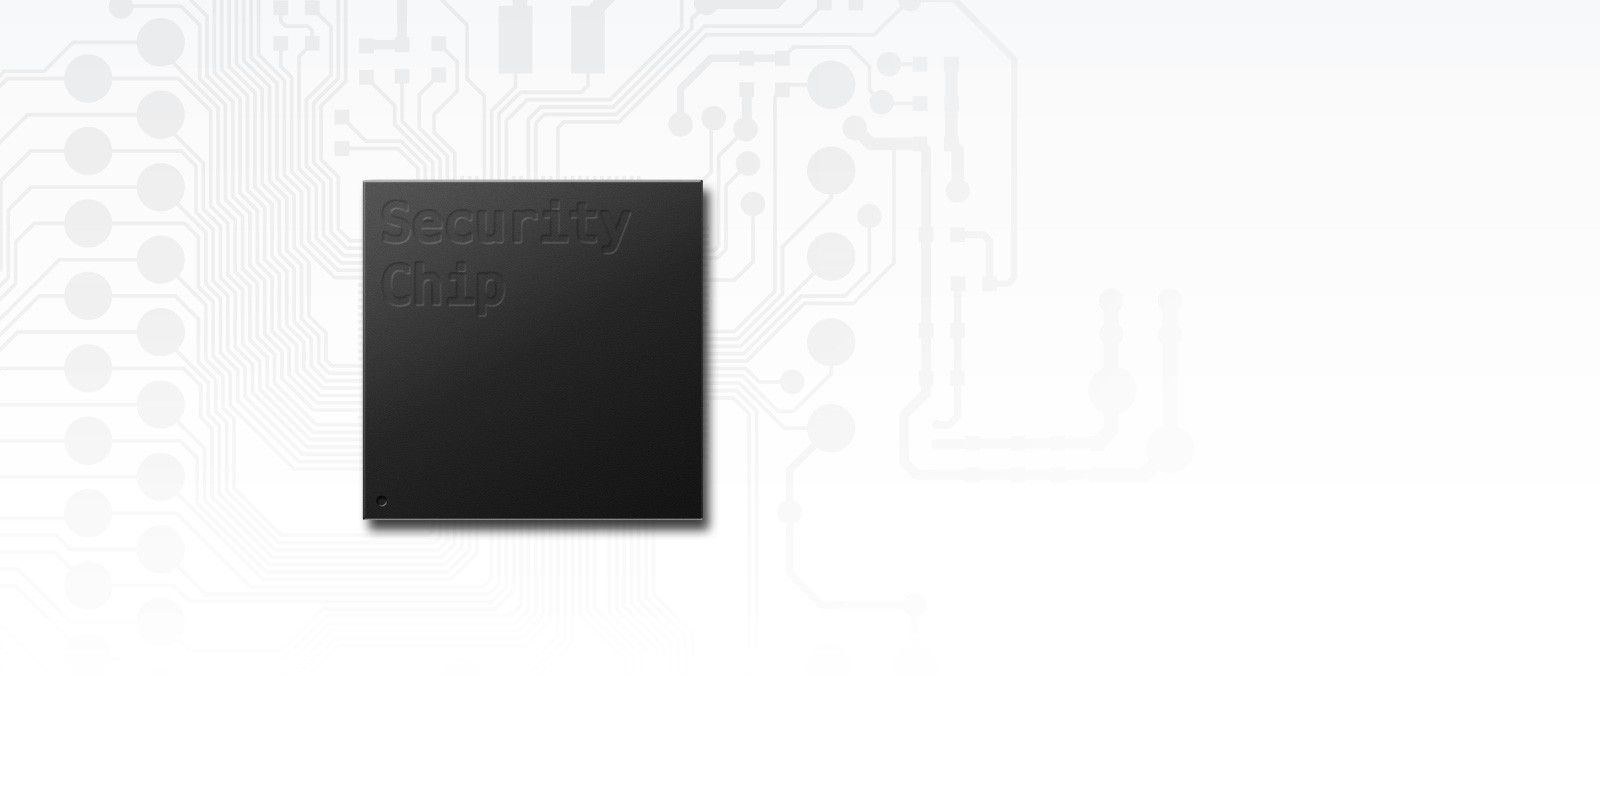 FEITIAN R502 Dual Interface Smart Card Reader has high security level hardware design